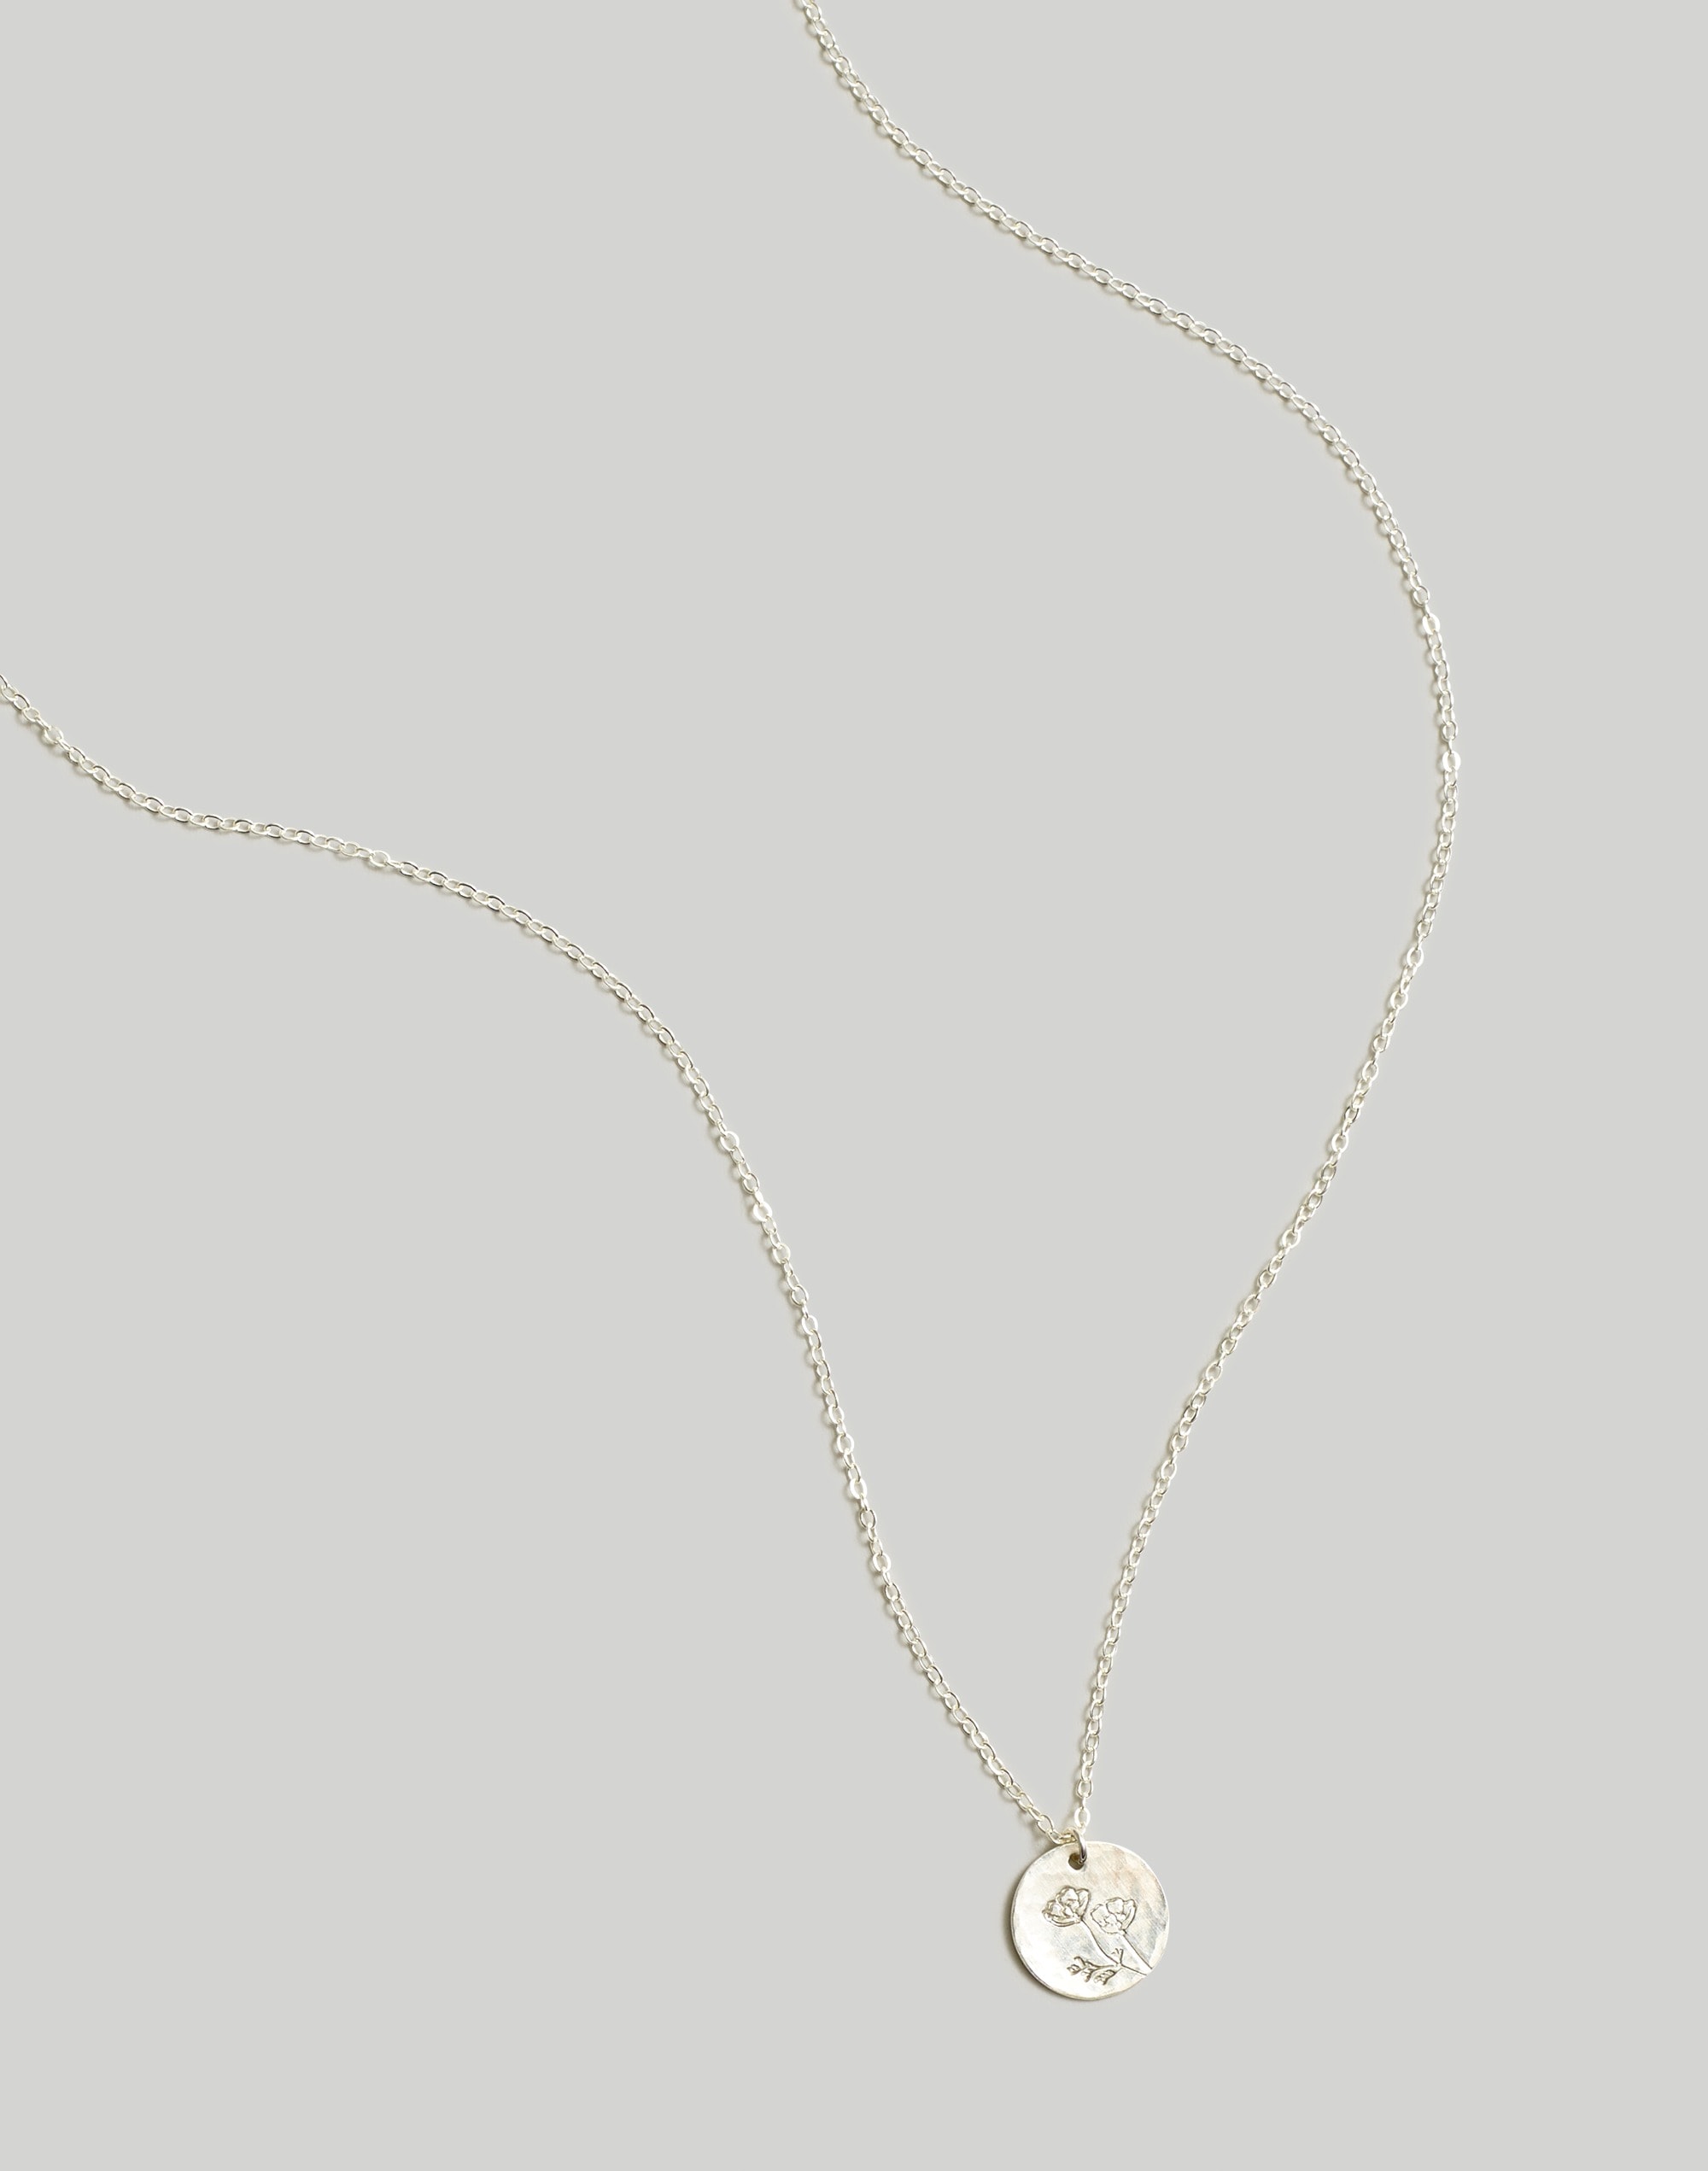 In Situ Jewelry Sterling Silver Poppy Flower Necklace